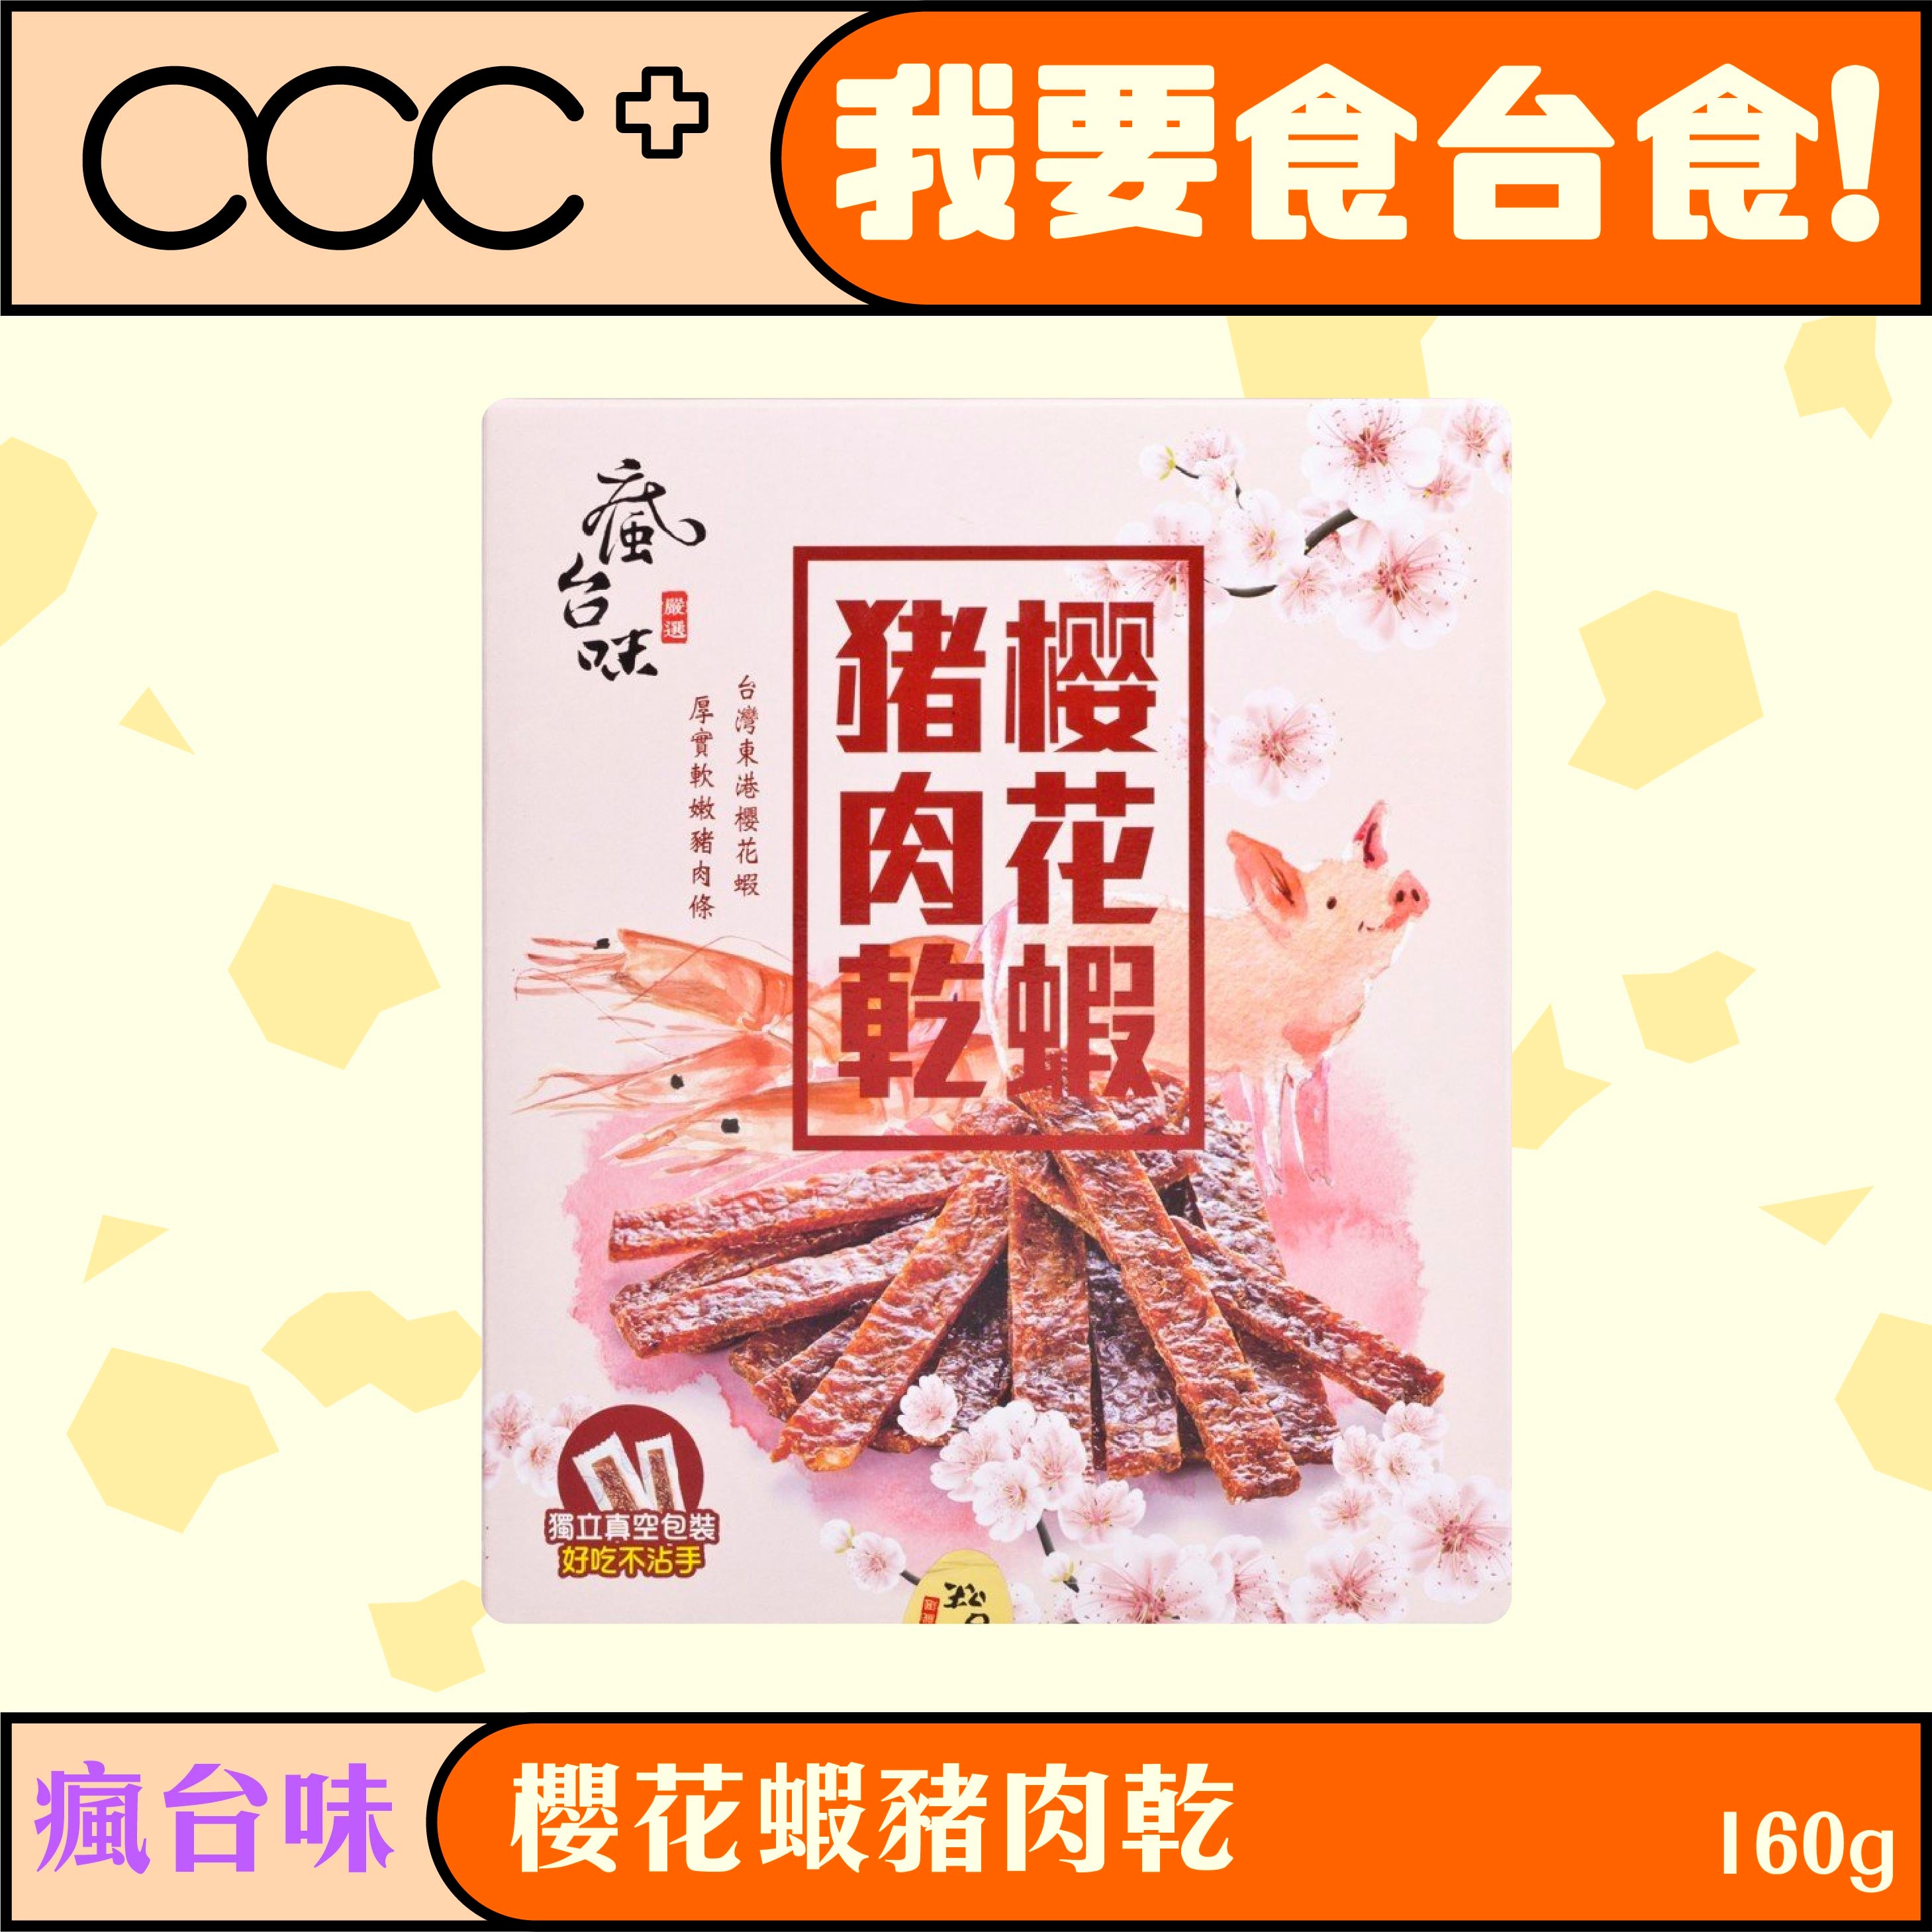 Crazy Taste - Cherry Blossom Shrimp and Pork Jerky 160g